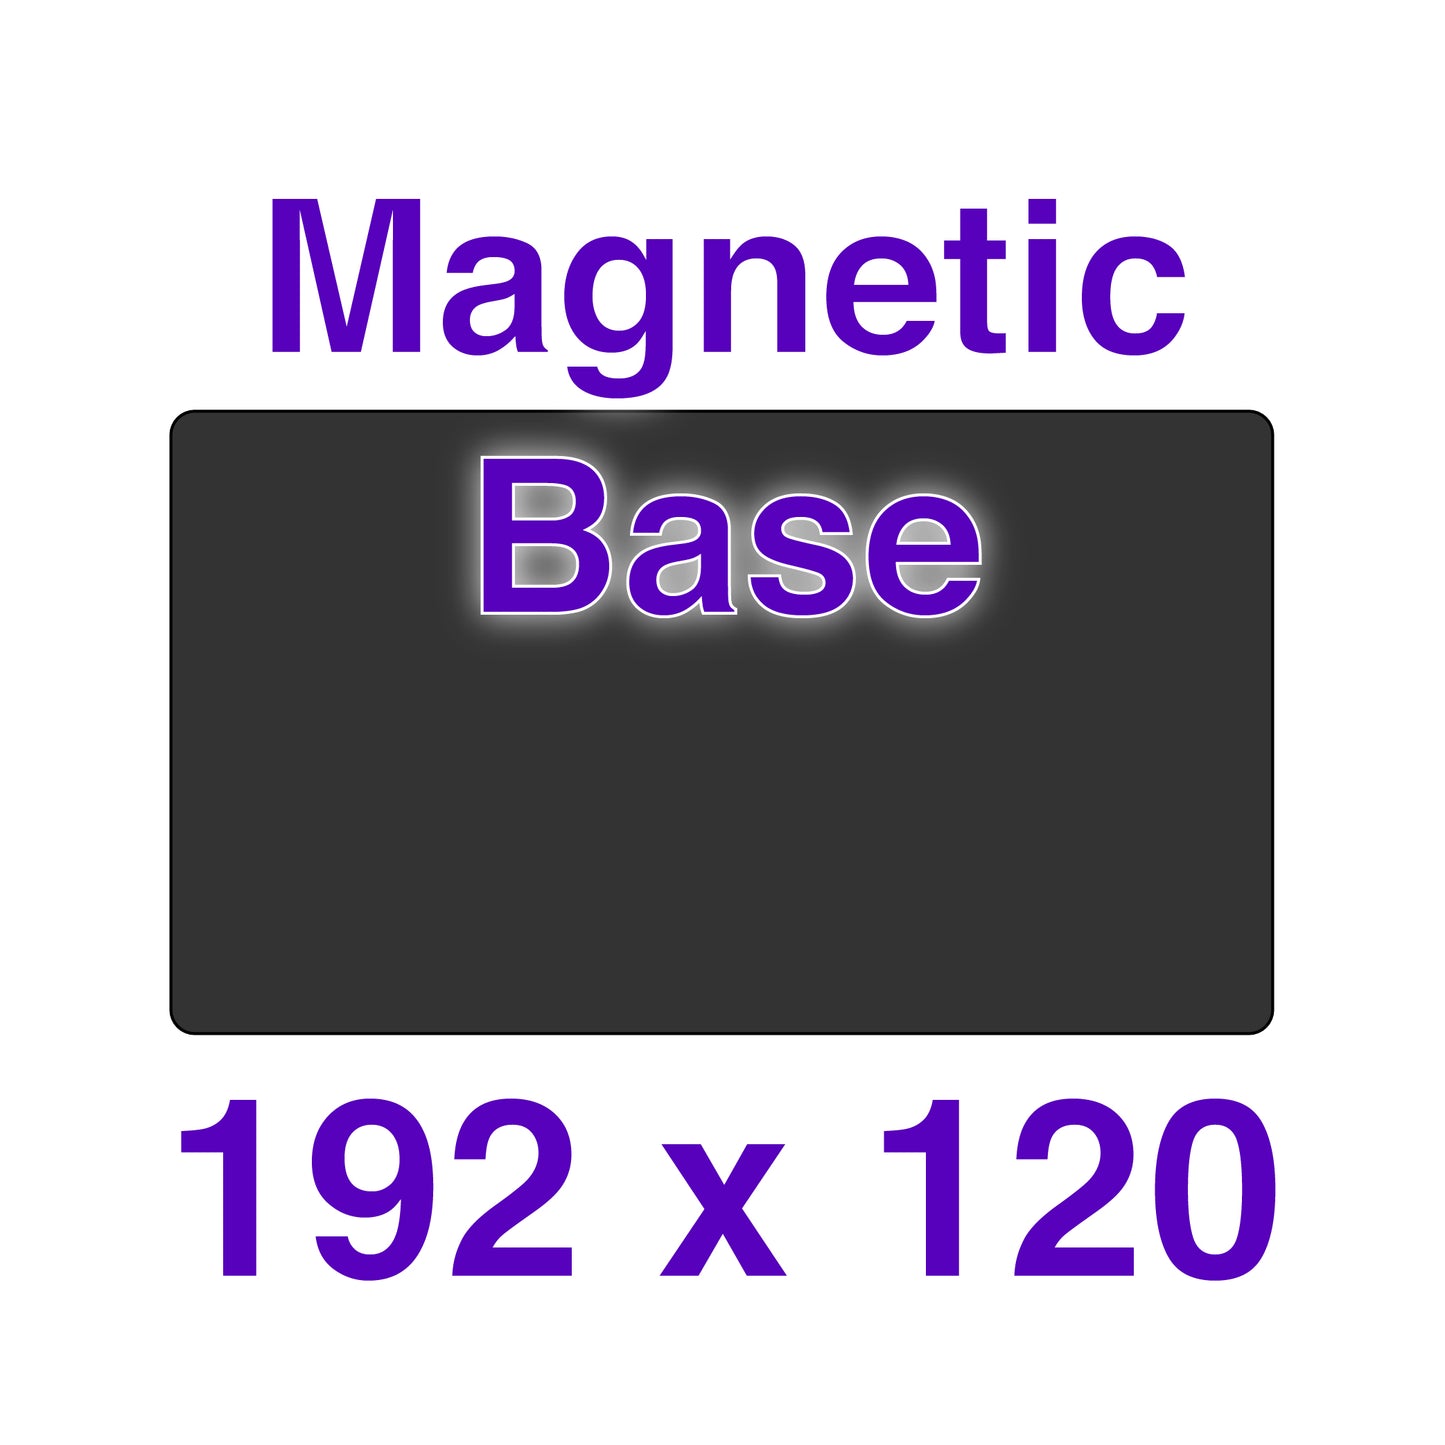 Magnetic Base - 192 x 120